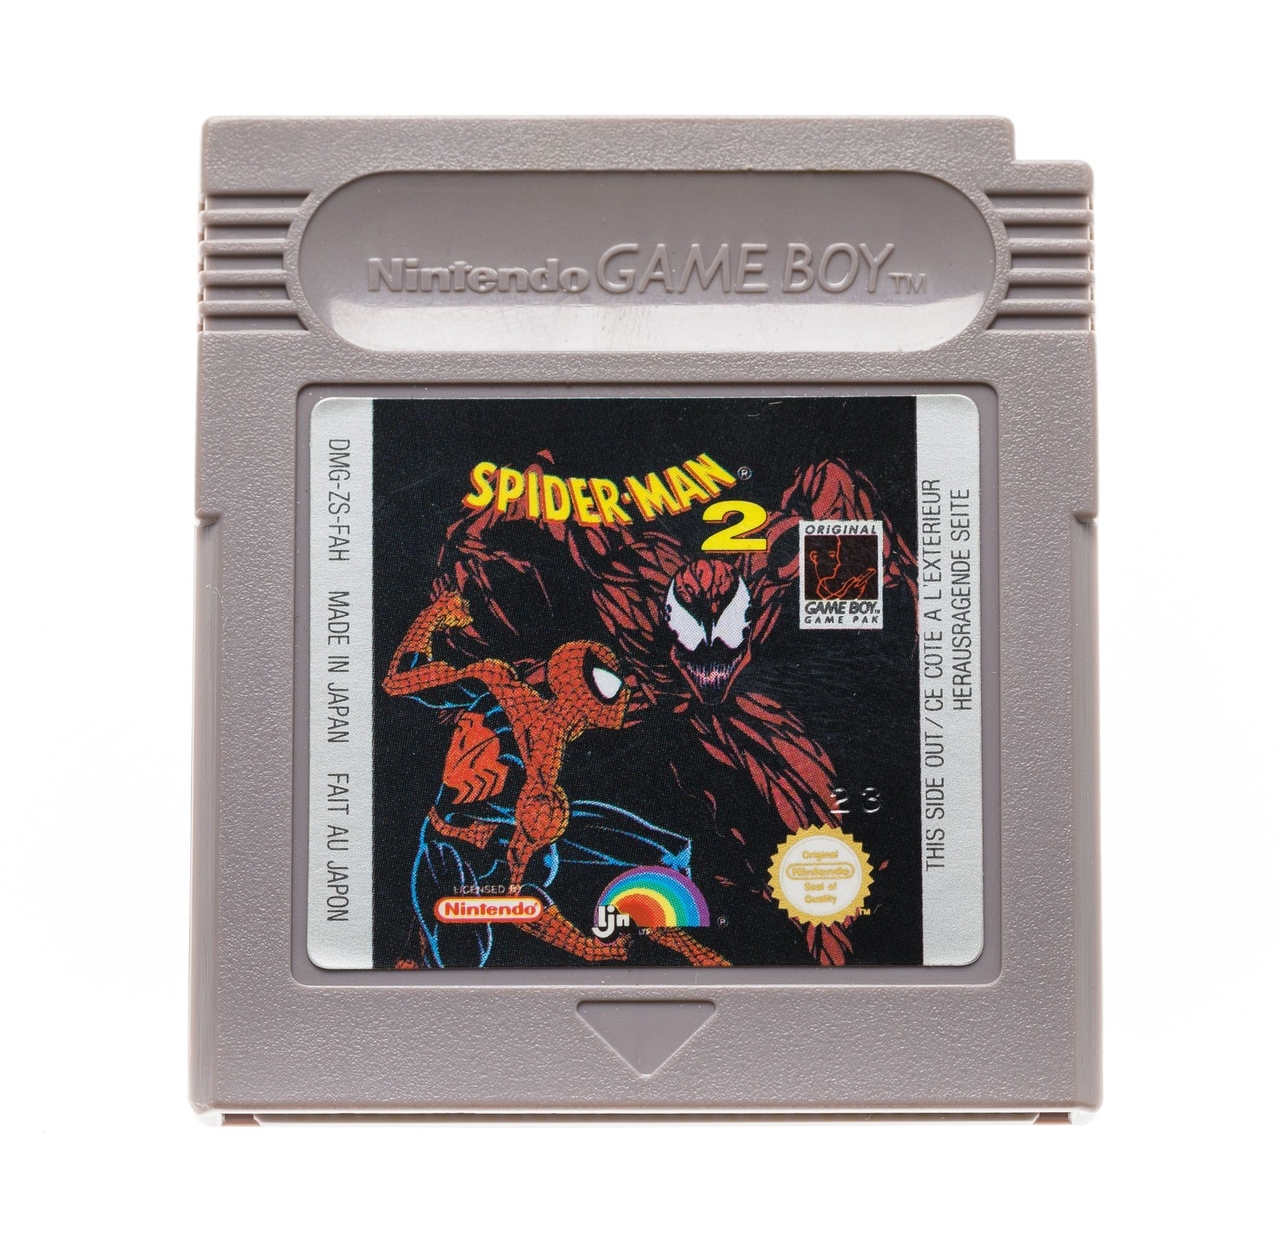 Spider-Man 2 Kopen | Gameboy Classic Games